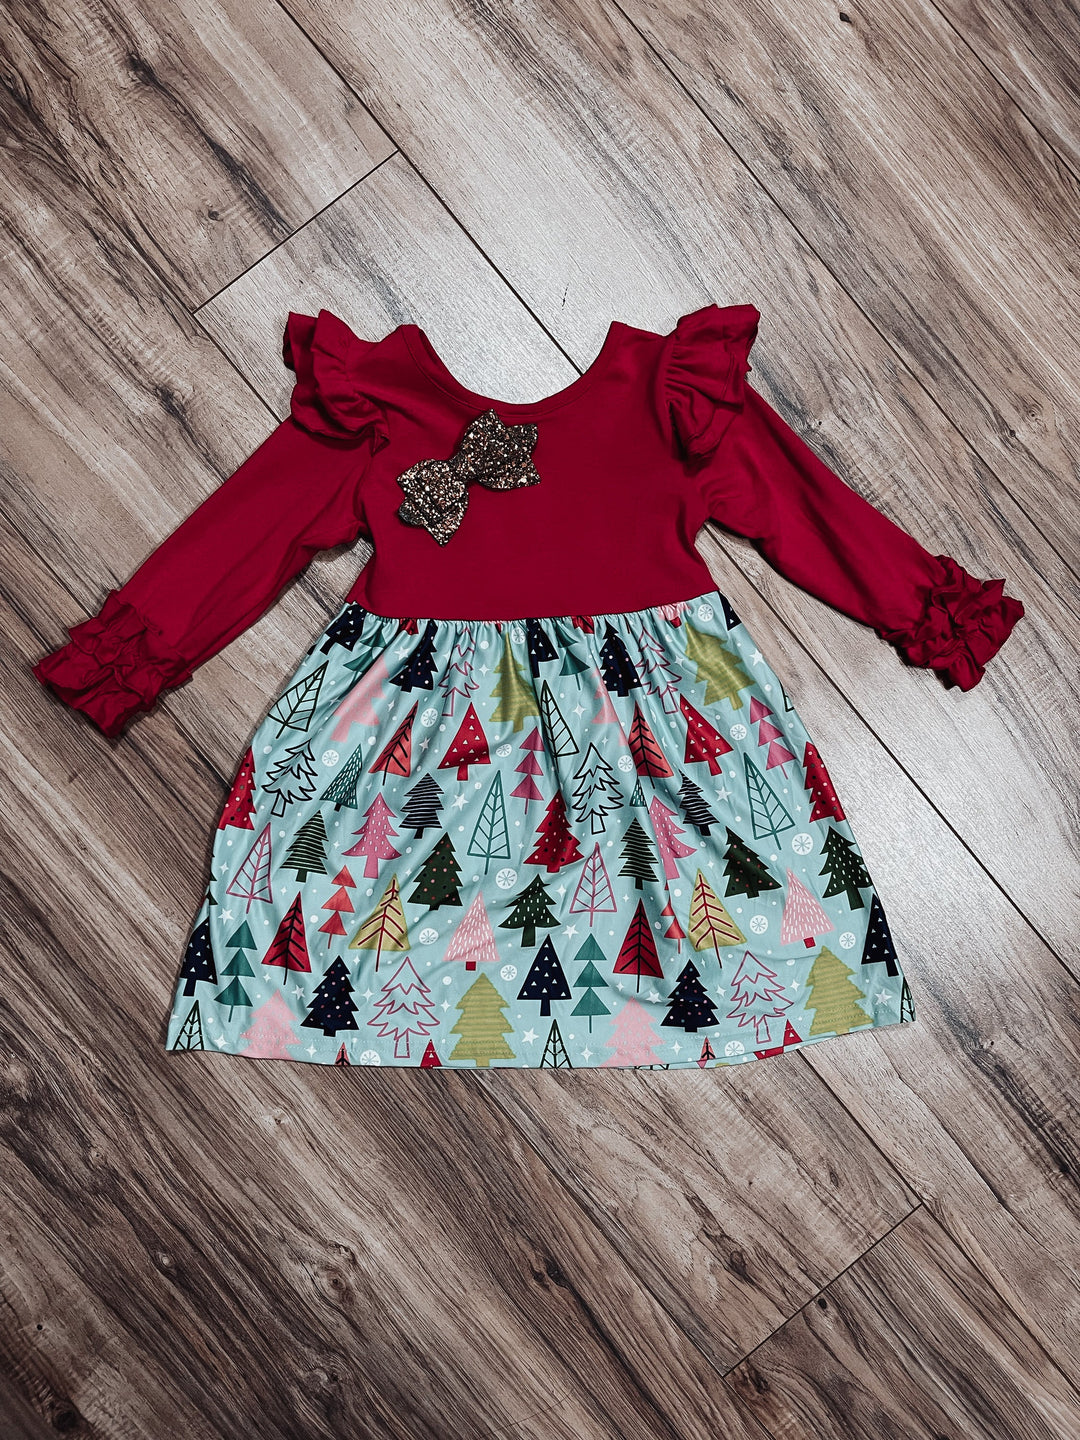 Children's retro Christmas dress - Jayden Layne